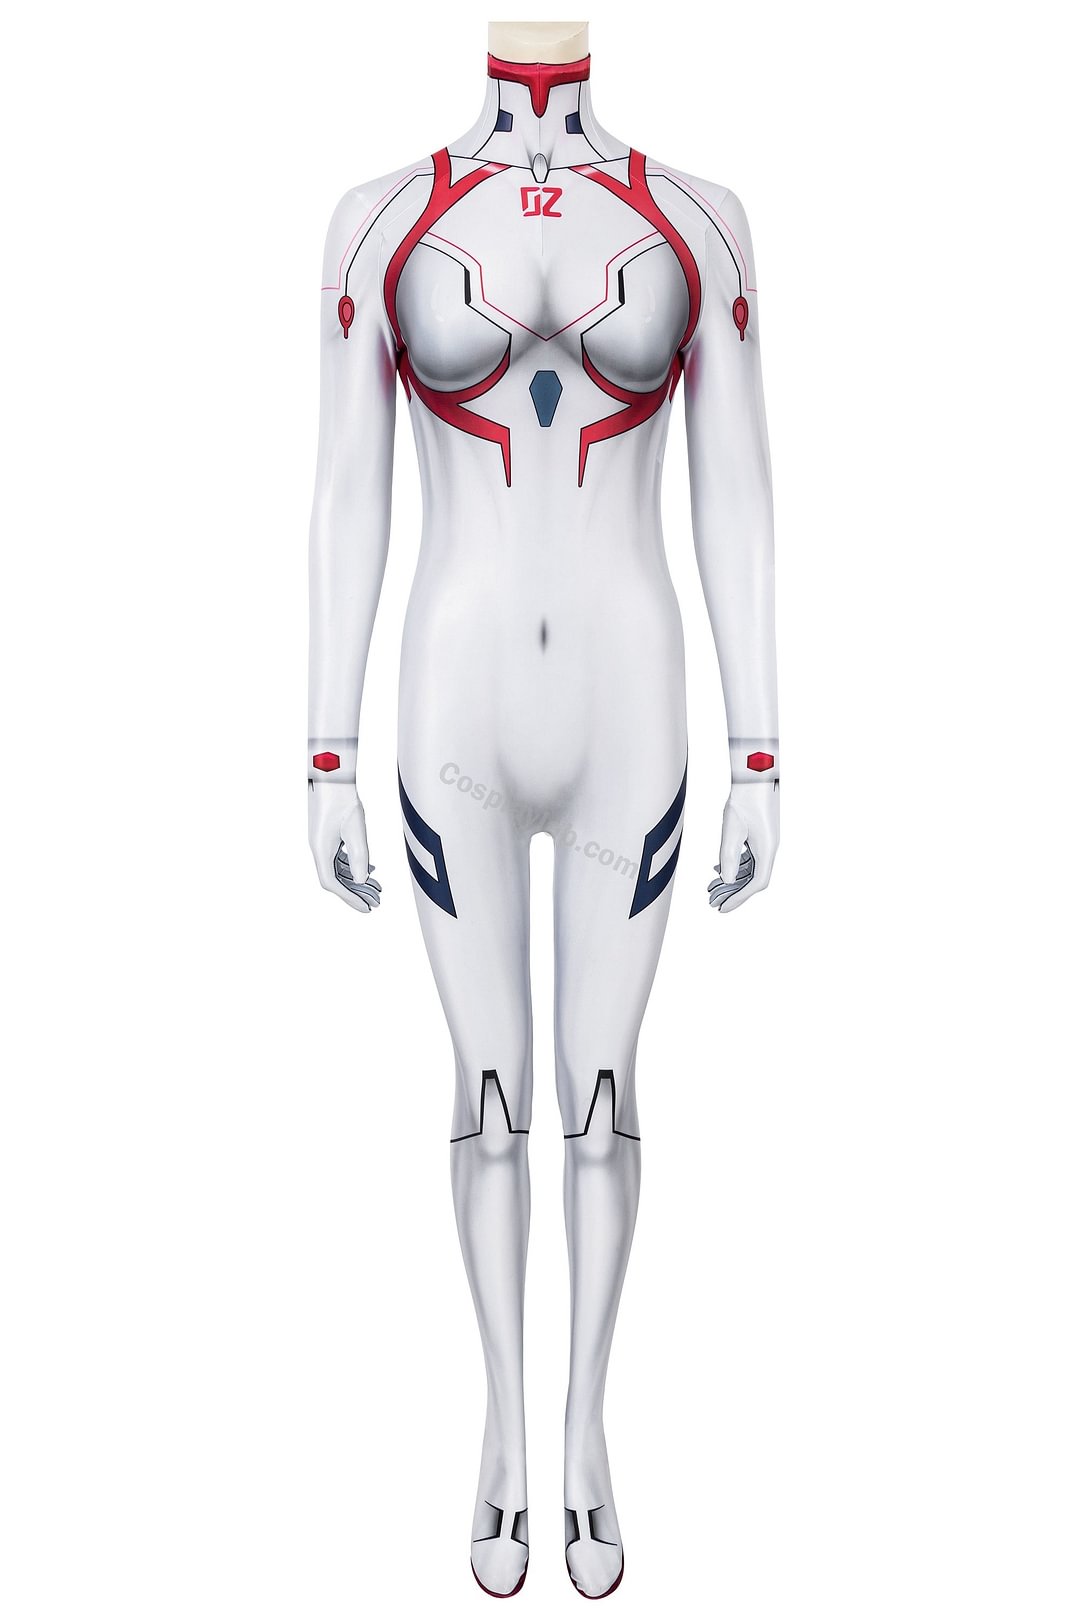 Neon Genesis Evangelion Asuka Langley Soryu Cosplay Costume Zentai white Jumpsuit By CosplayLab